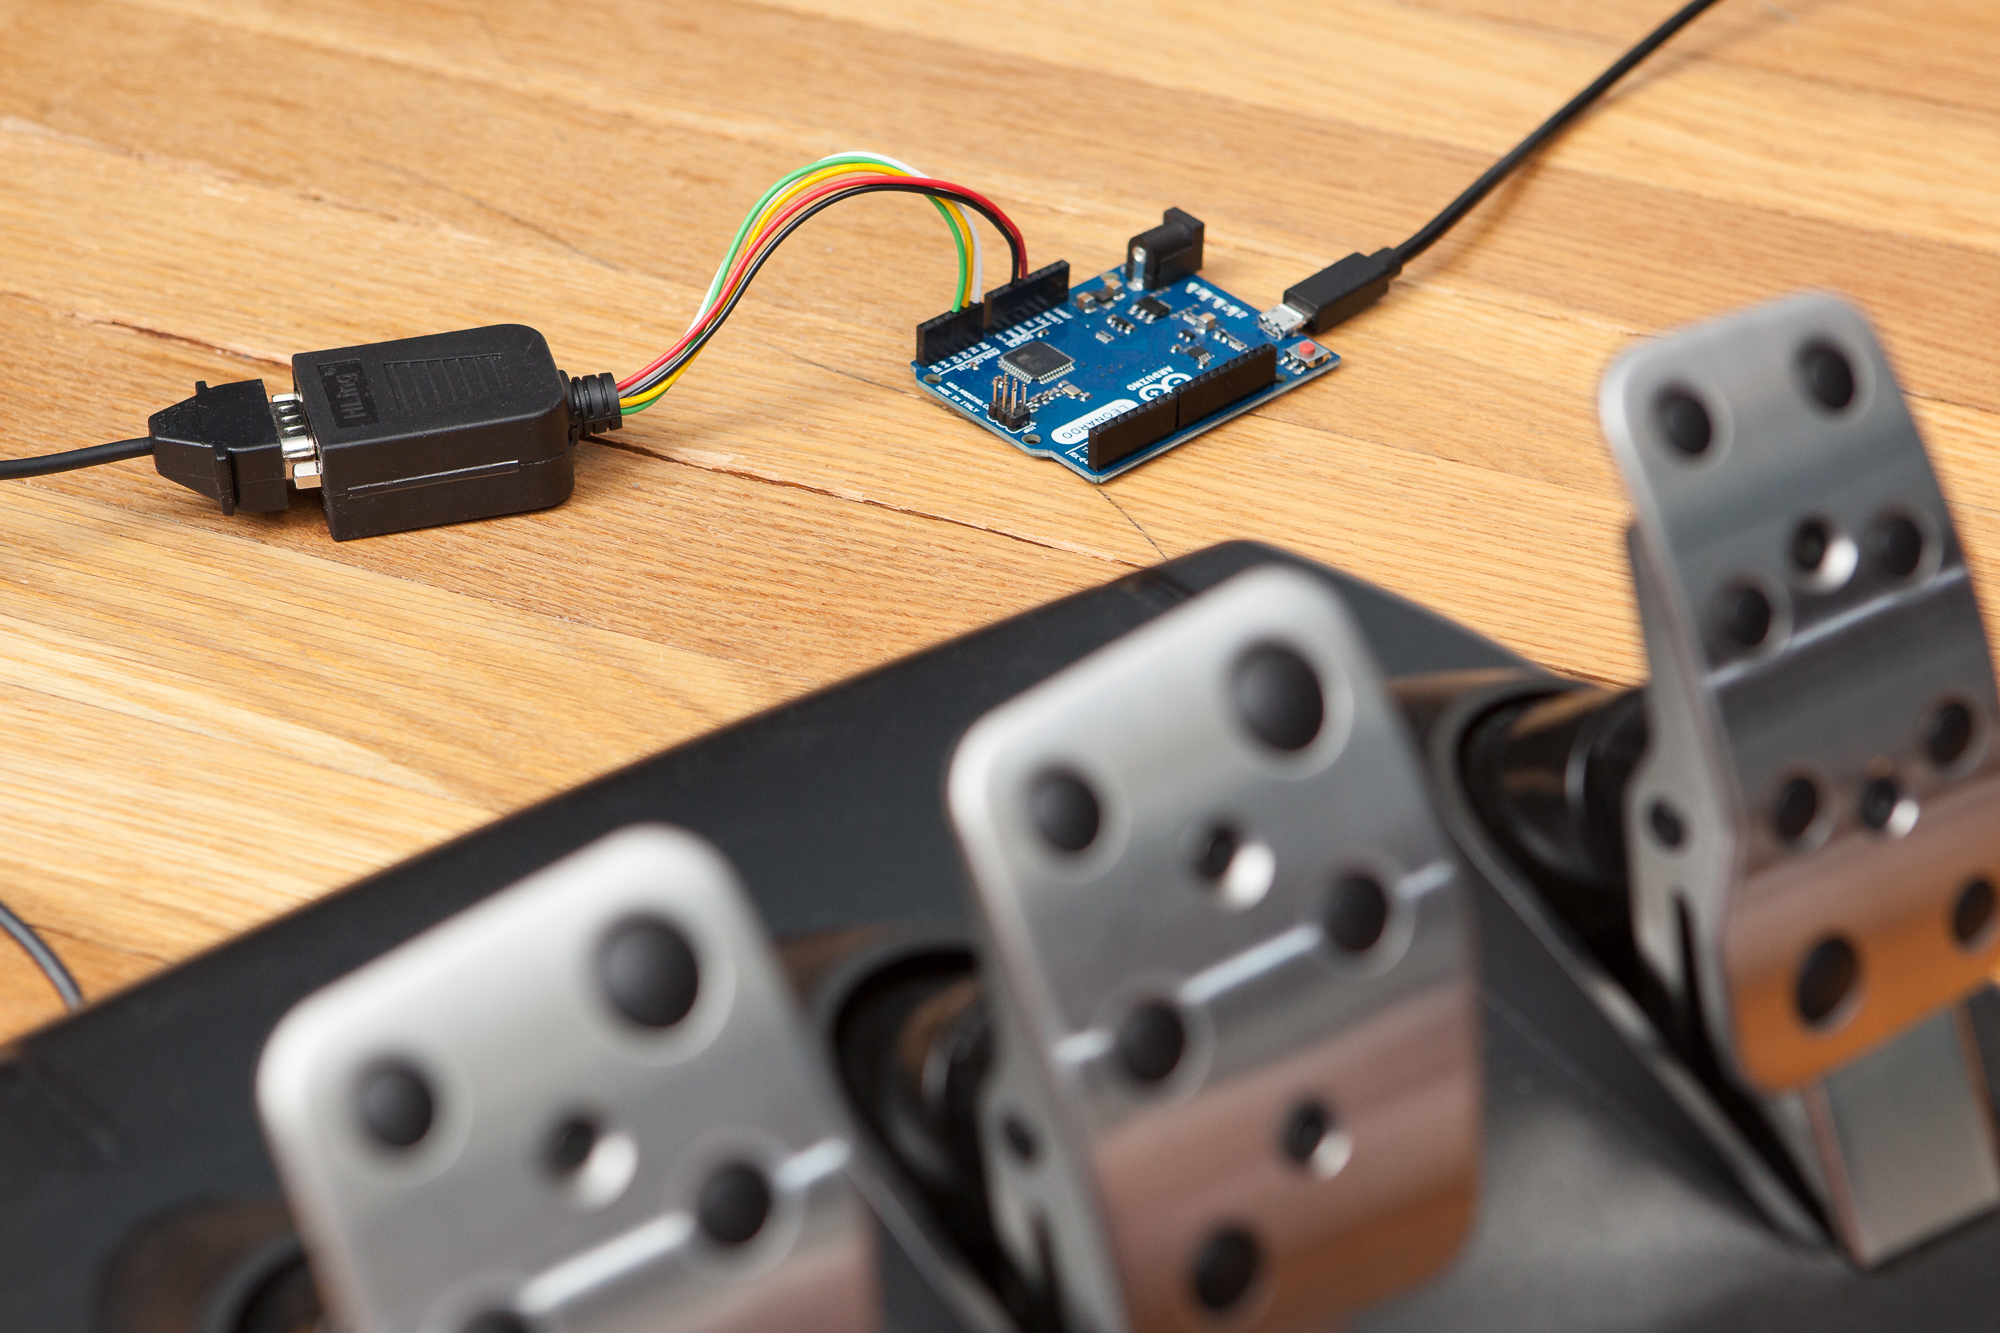 Intolerable Escoger bordado How to Build a DIY Logitech Pedals USB Adapter - Parts Not Included